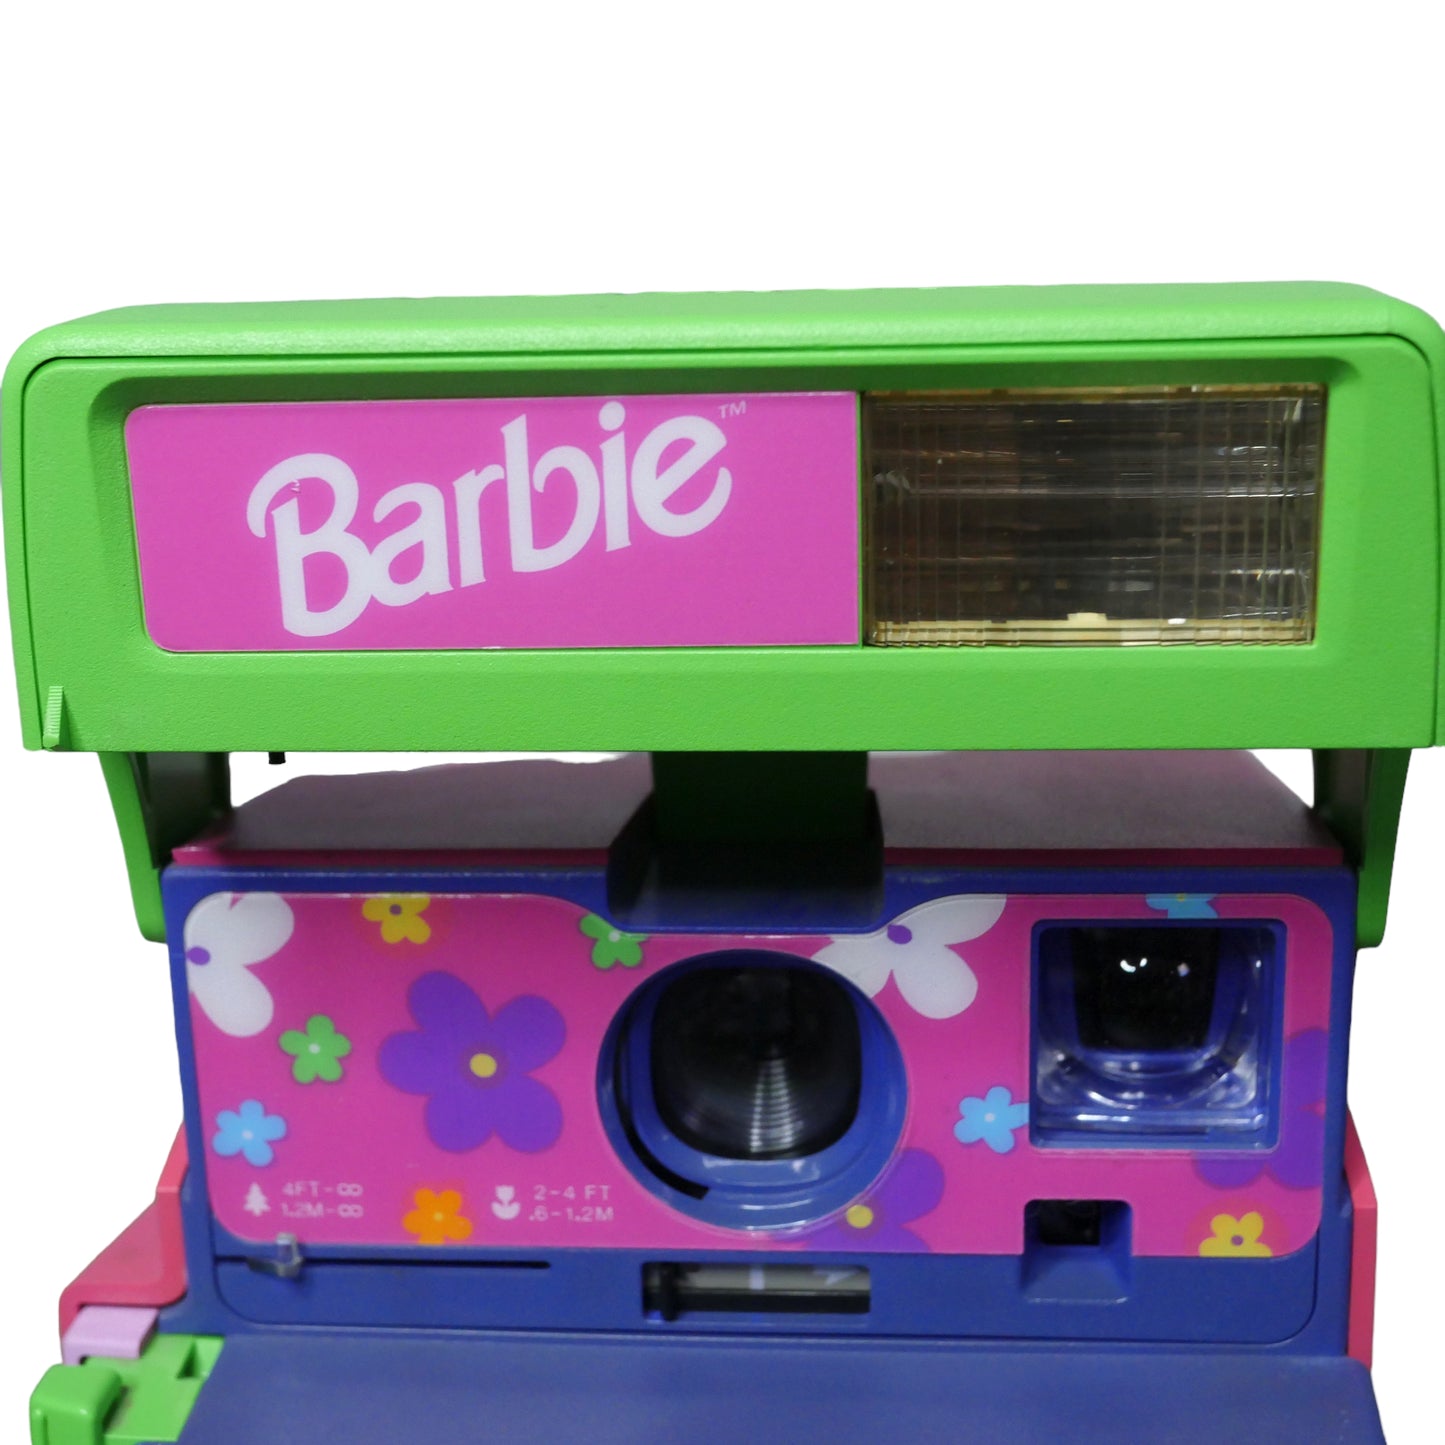 Polaroid 600 - Barbie Special Edition